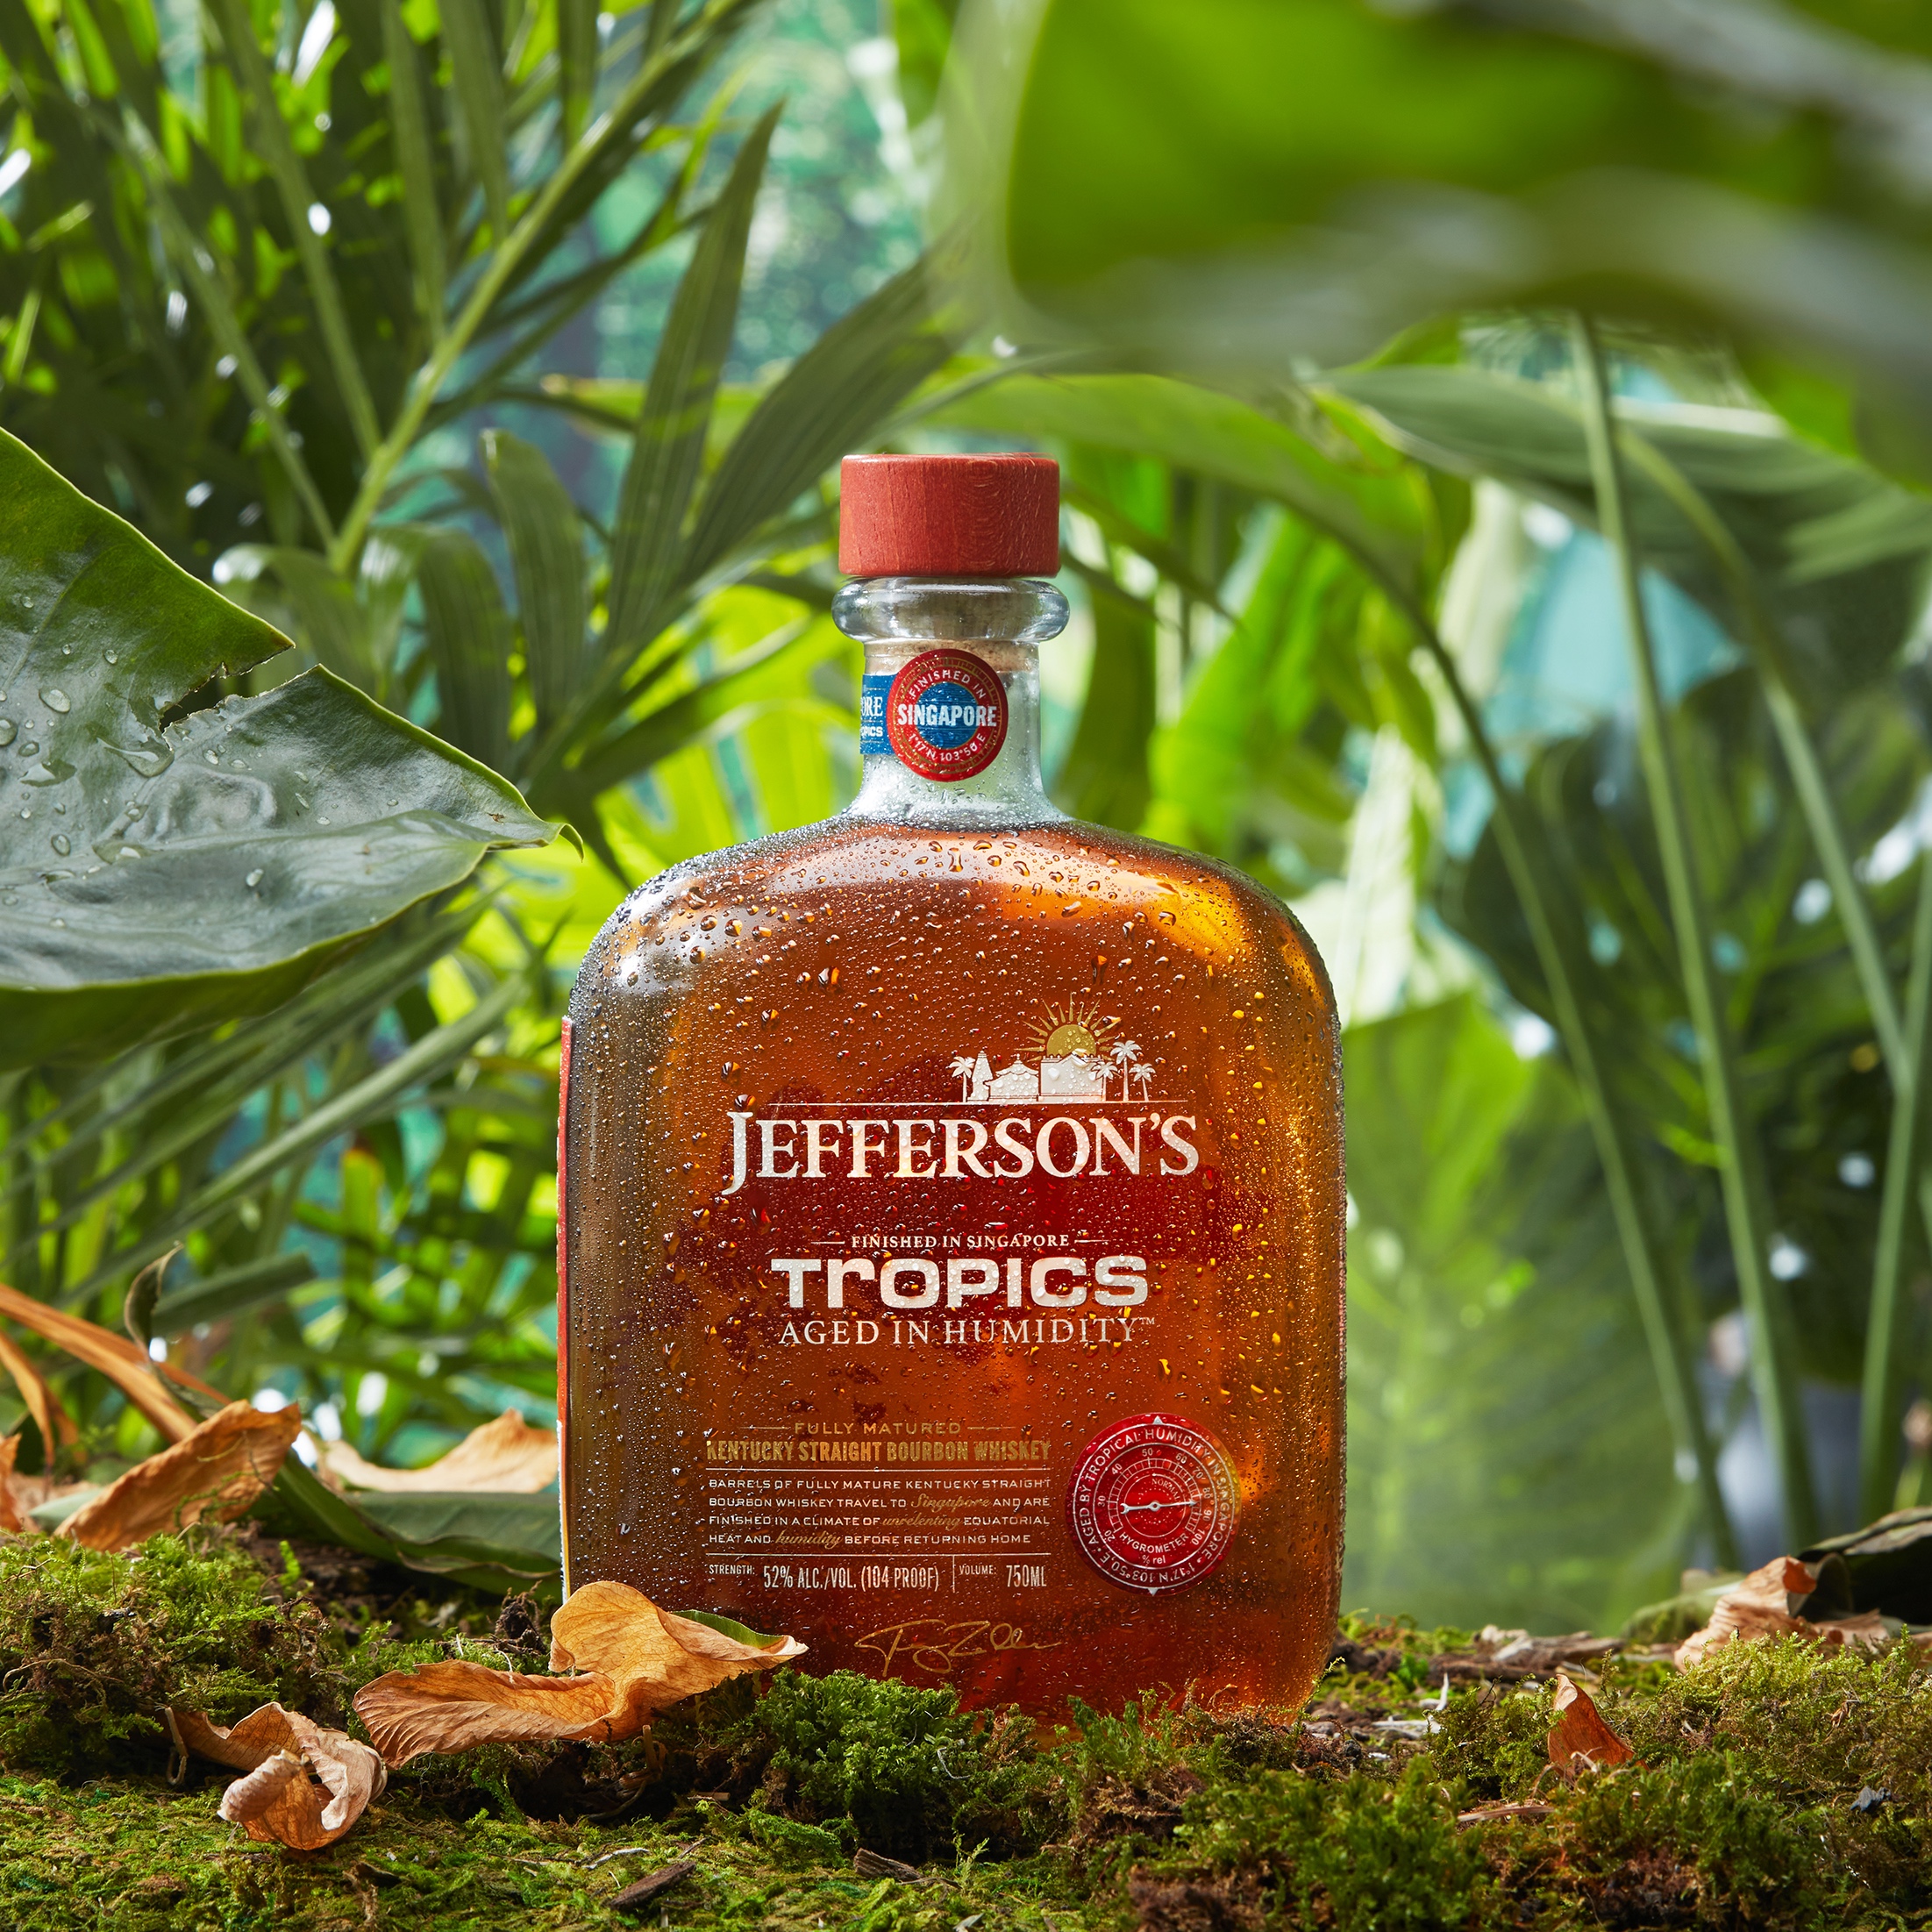 245: Jefferson’s Bourbon Heads to the Tropics